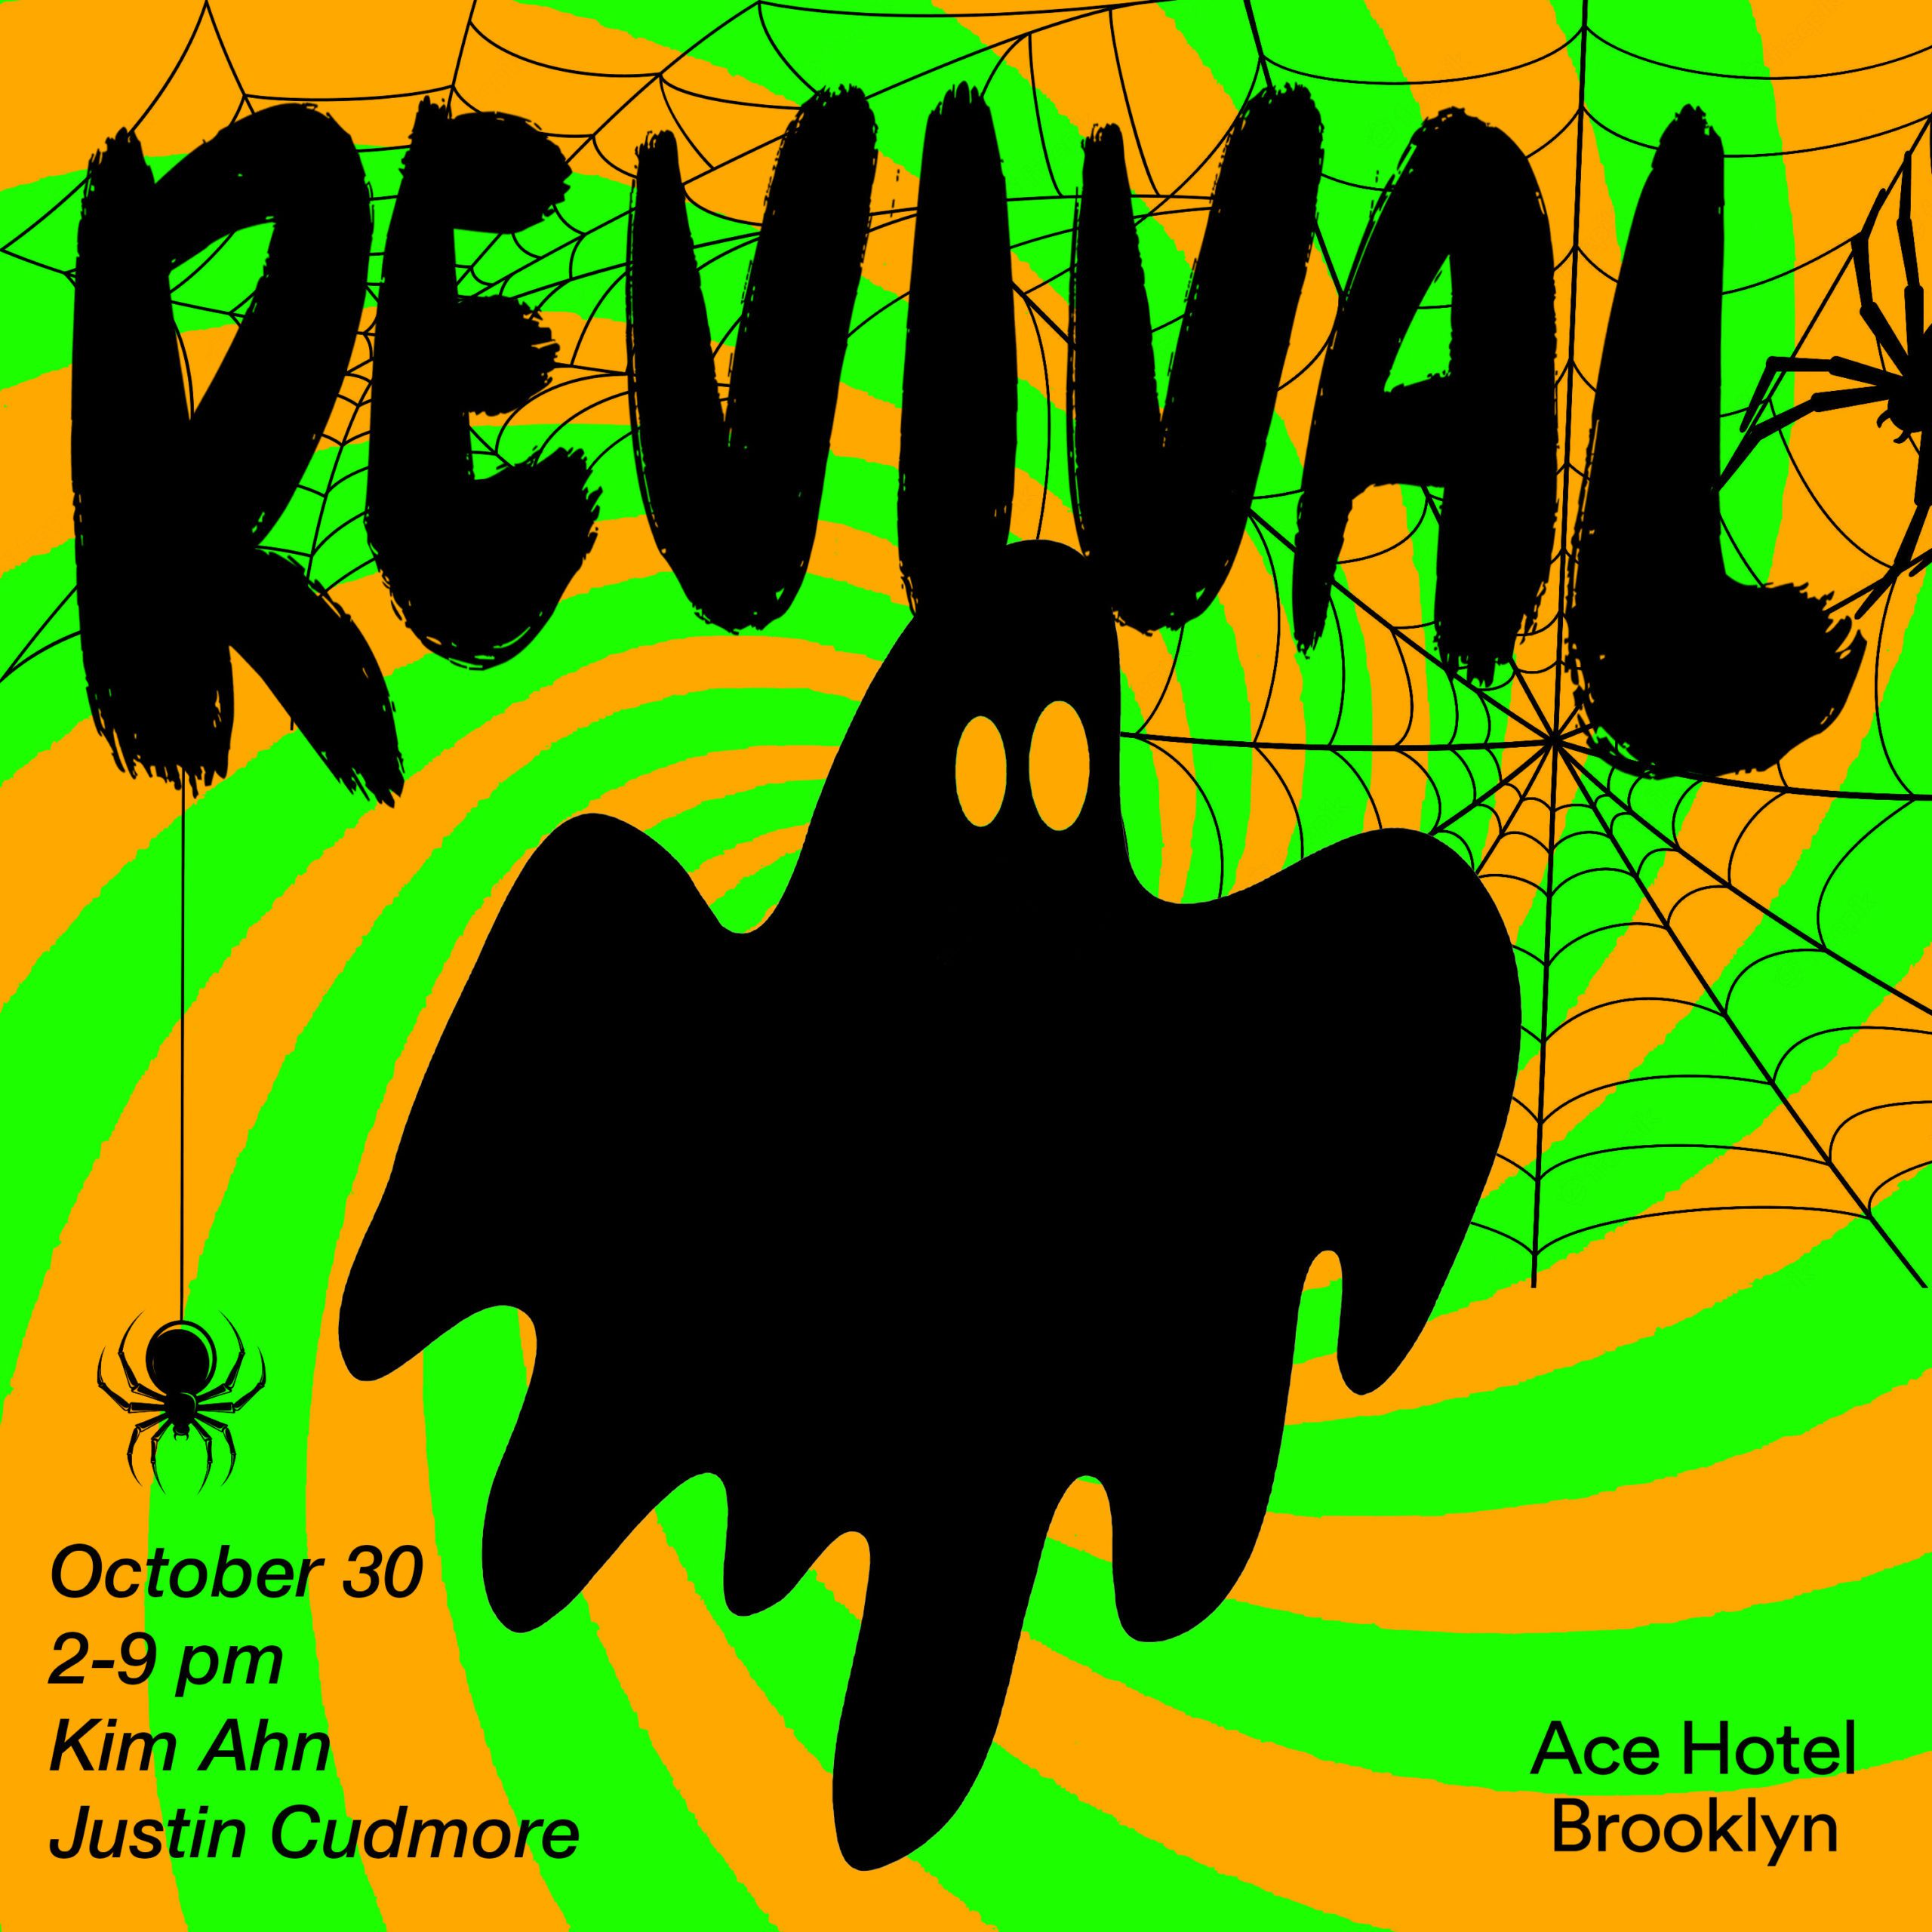 Revival promo flyer